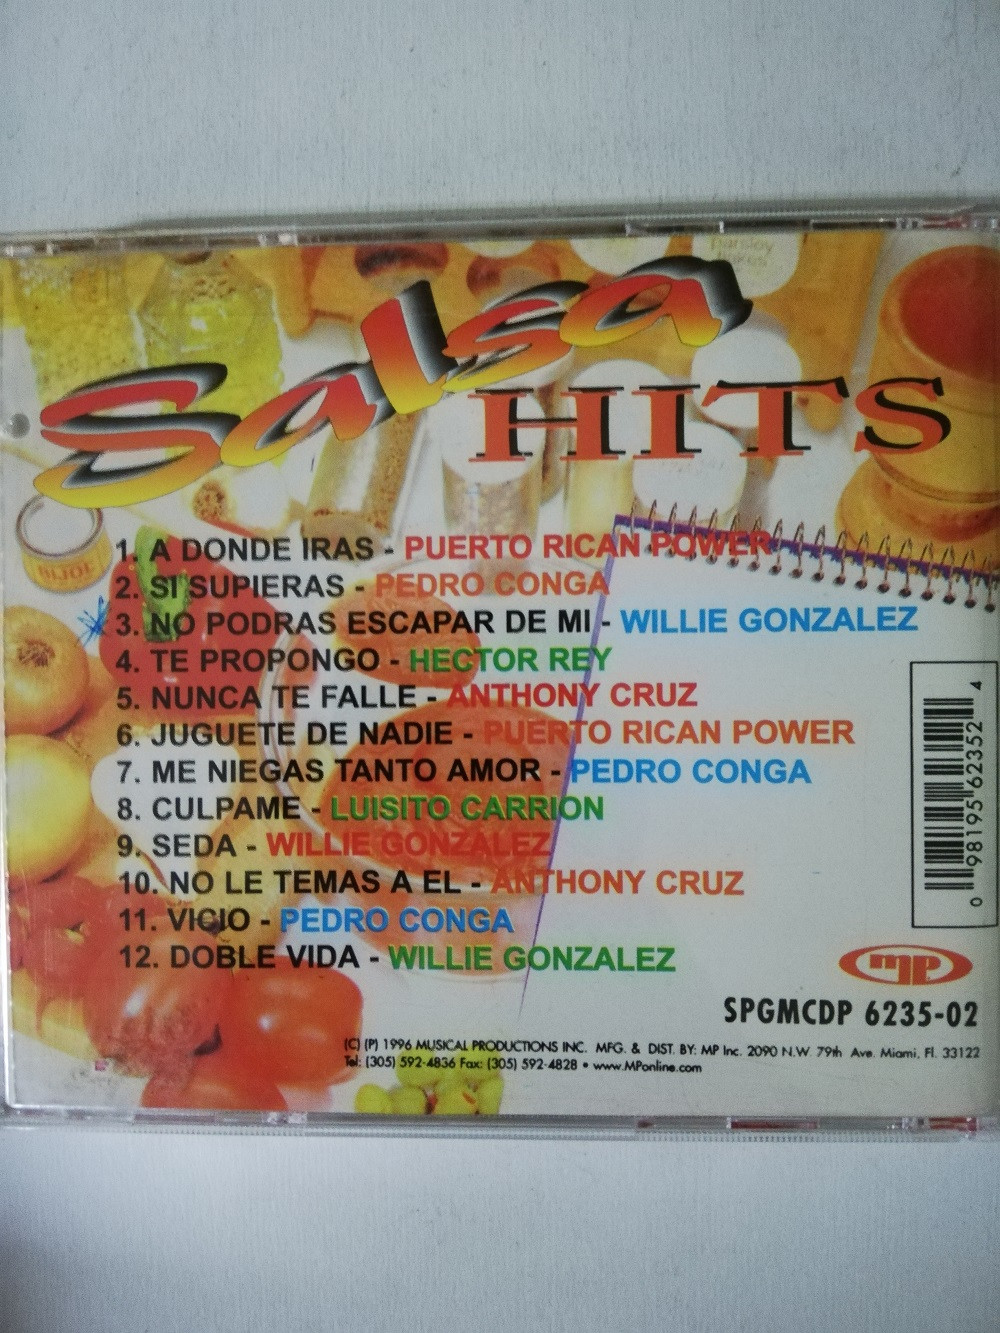 Imagen CD SALSA HITS - VARIOS INTÉRPRETES 2